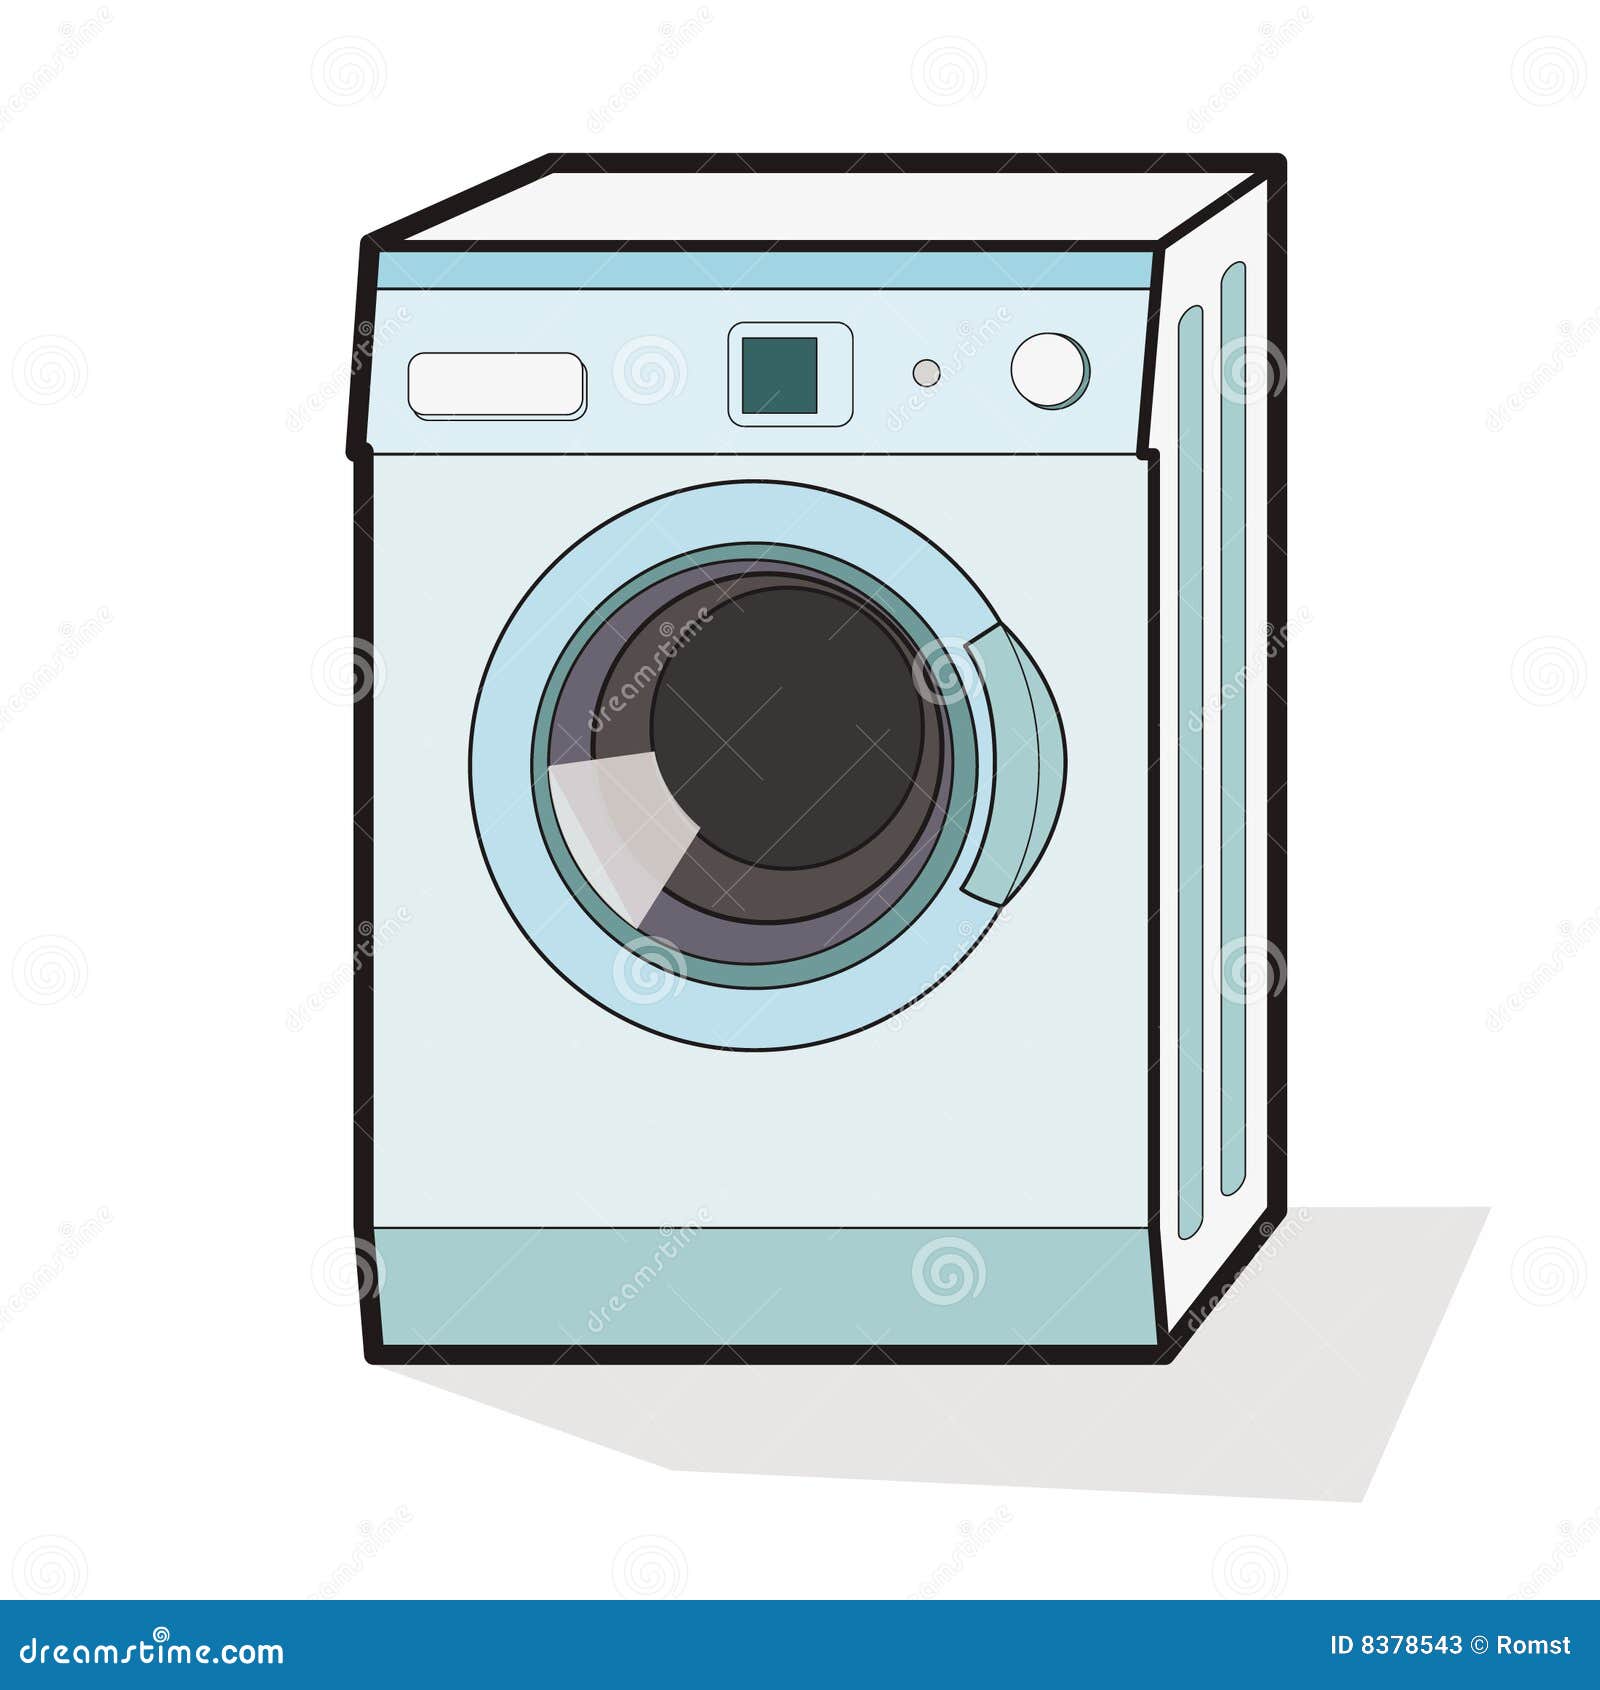 clipart clothes dryer - photo #49